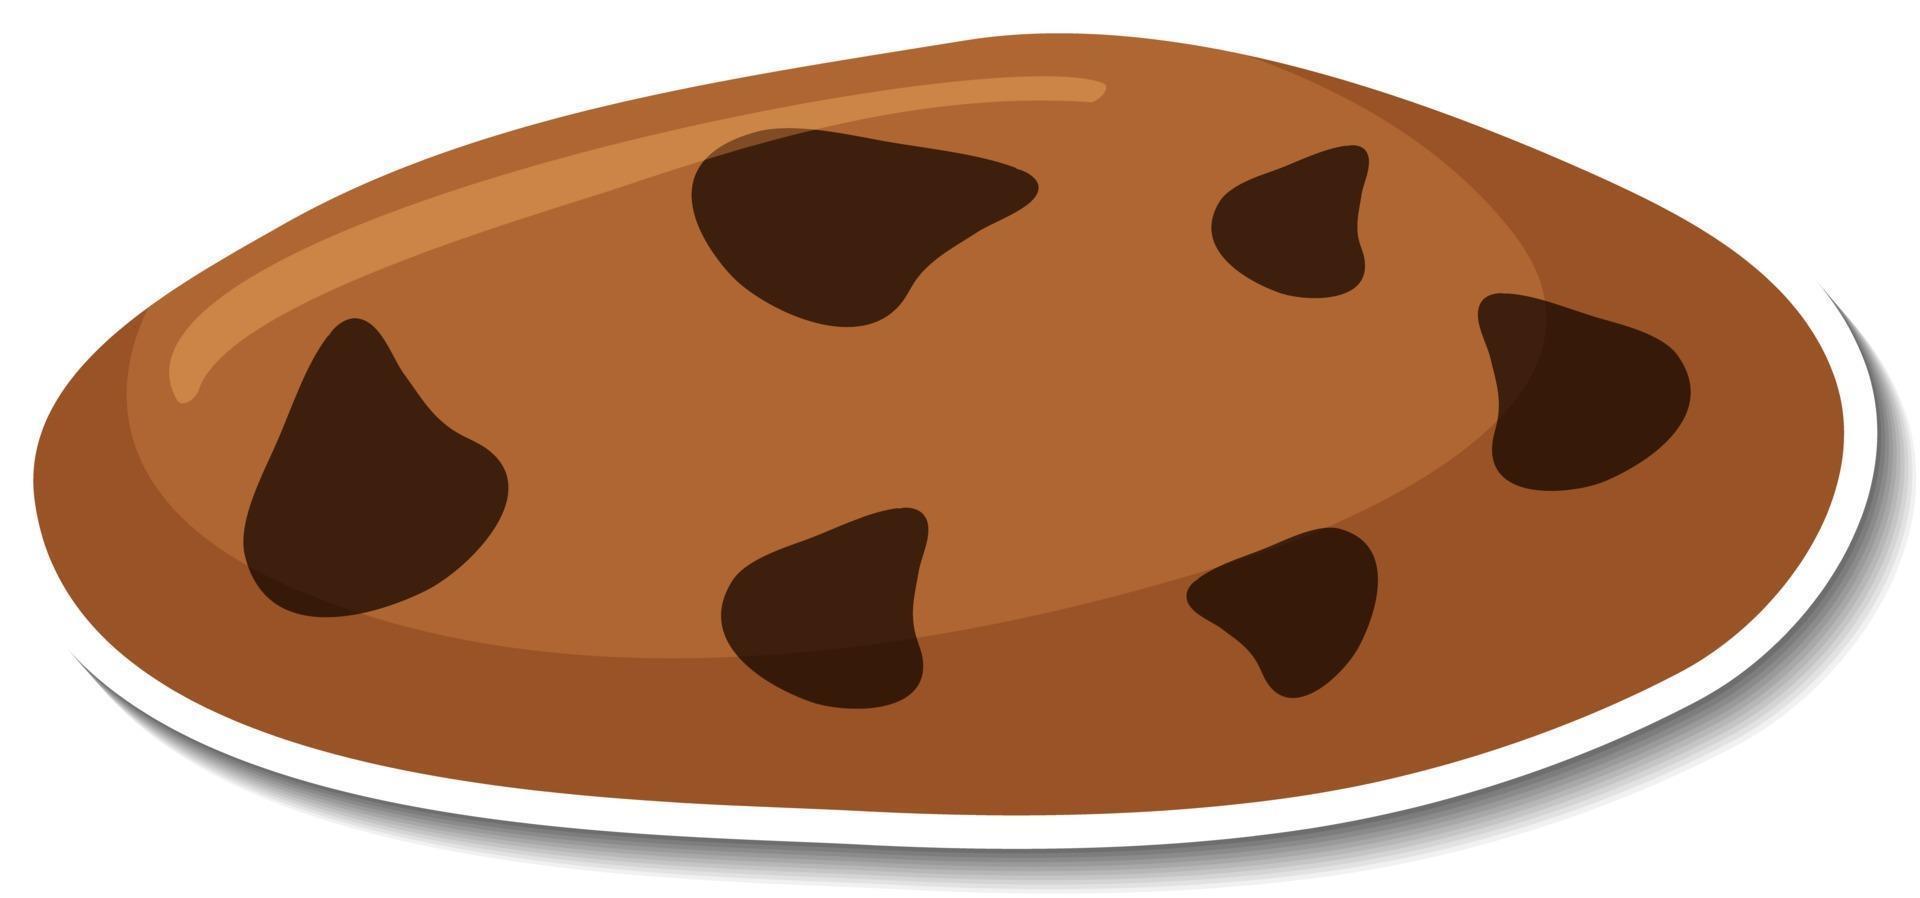 Adesivo de biscoitos de chocolate no fundo branco vetor